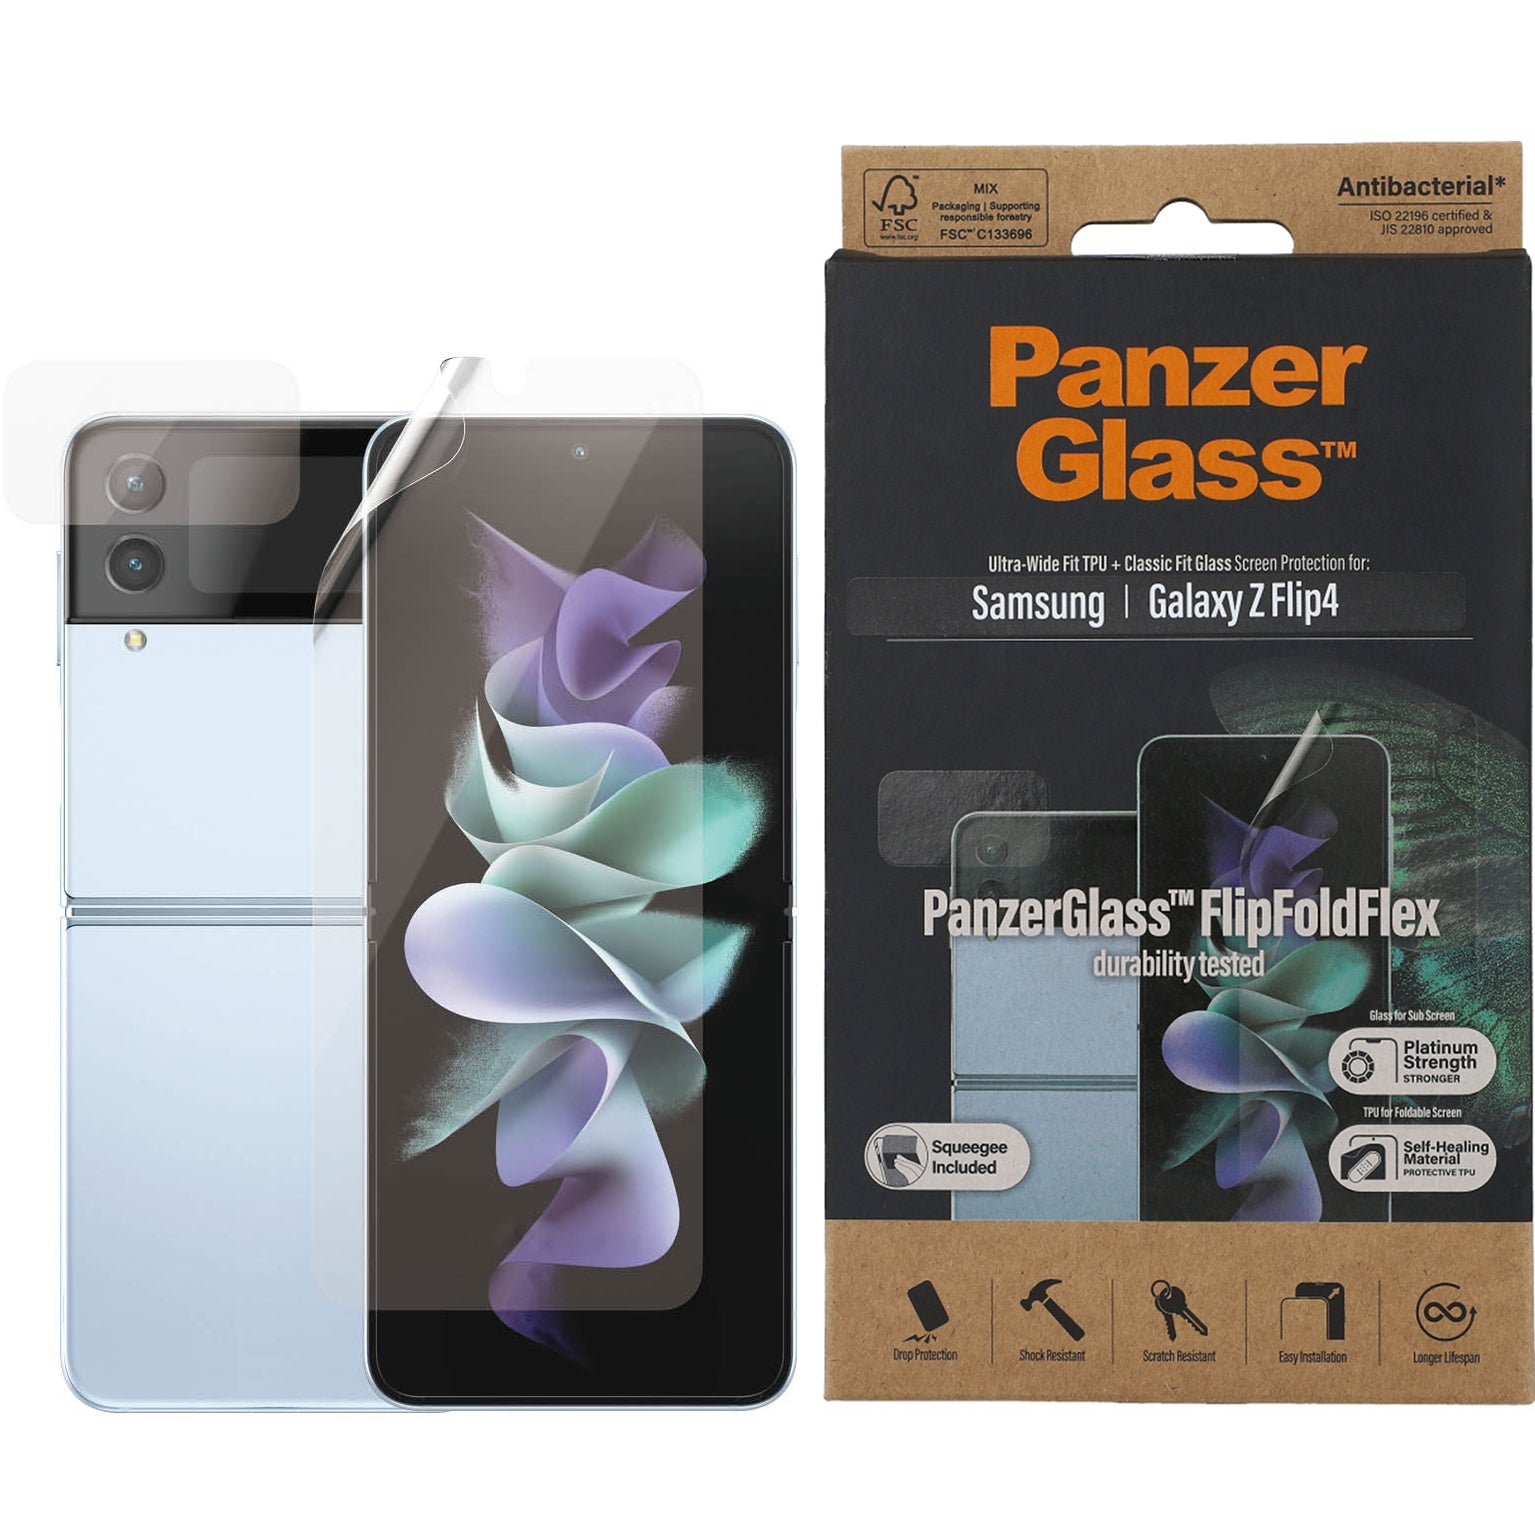 Set aus Folie PanzerGlass Ultra-Wide Fit TPU und gehärtetem Glas Classic Fit Glass für Galaxy Z Flip4